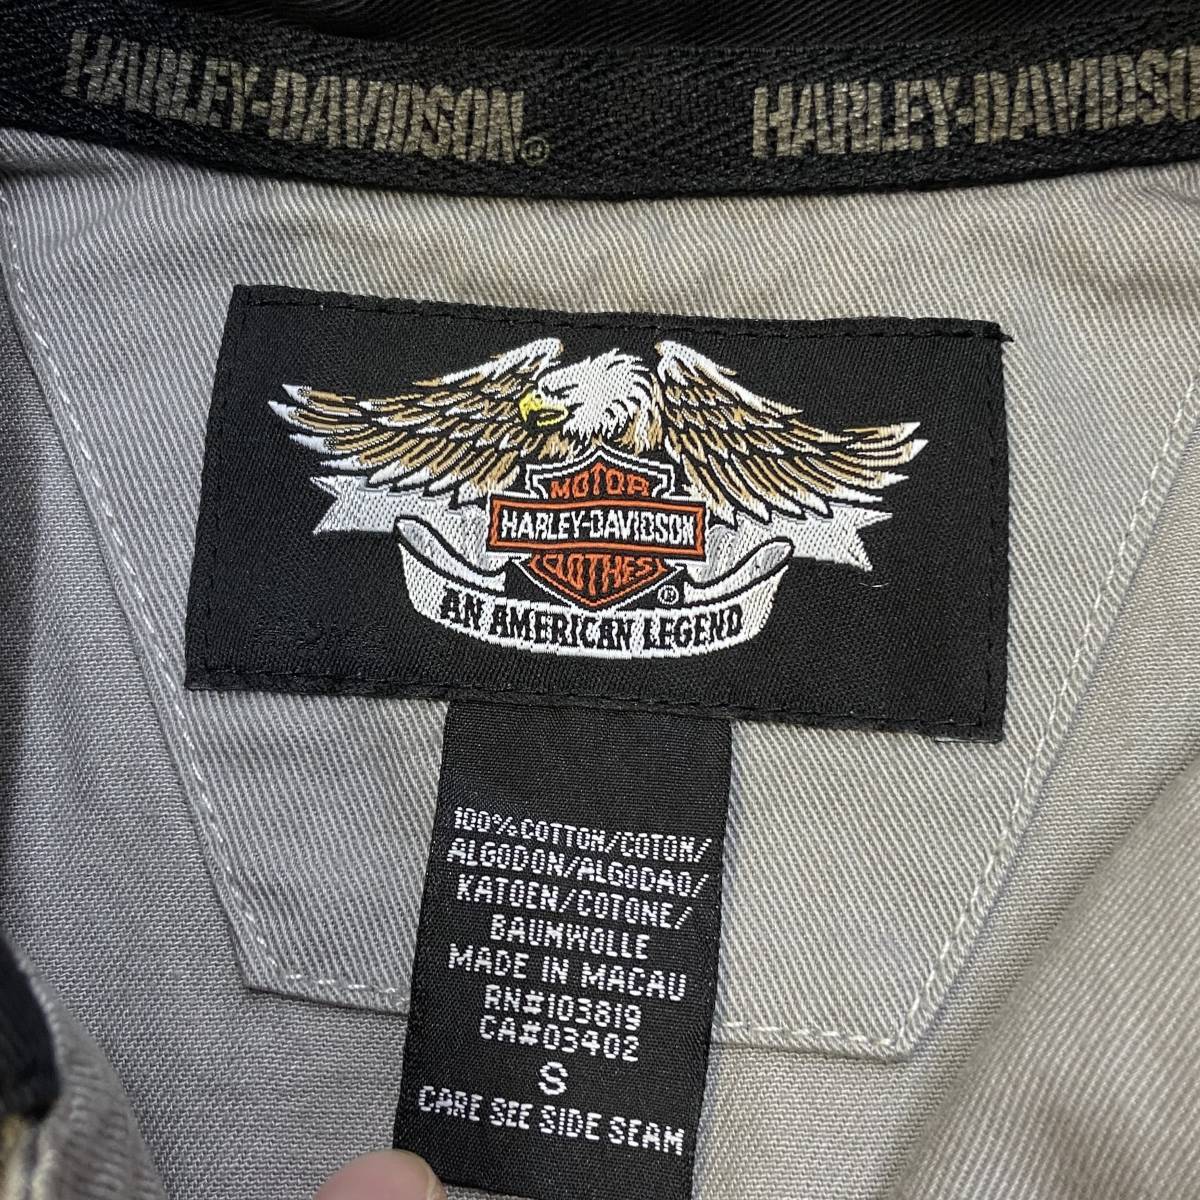 Harley Davidson ハーレーダビッドソン 半袖 ボタンダウンシャツ S グレー ブラック ロゴ スカル 刺繍 ボタンシャツ モーターサイクル_画像6